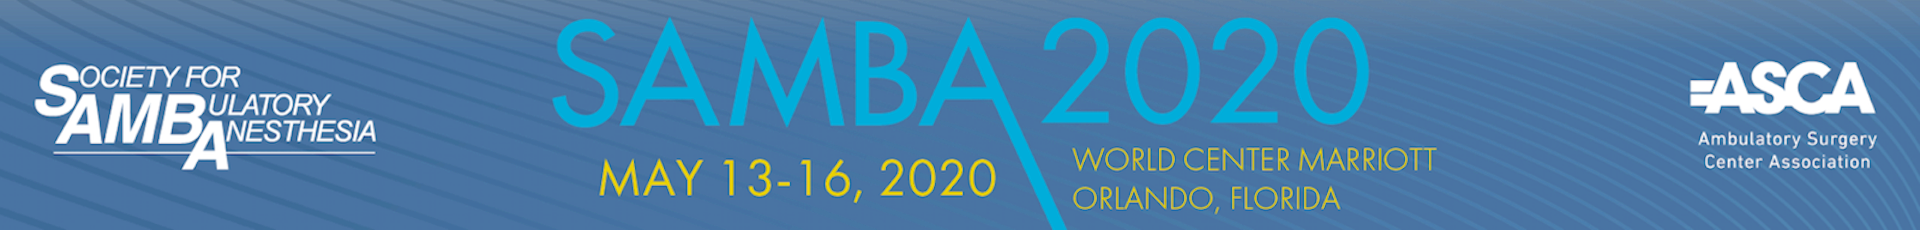 SAMBA 2020 Event Banner